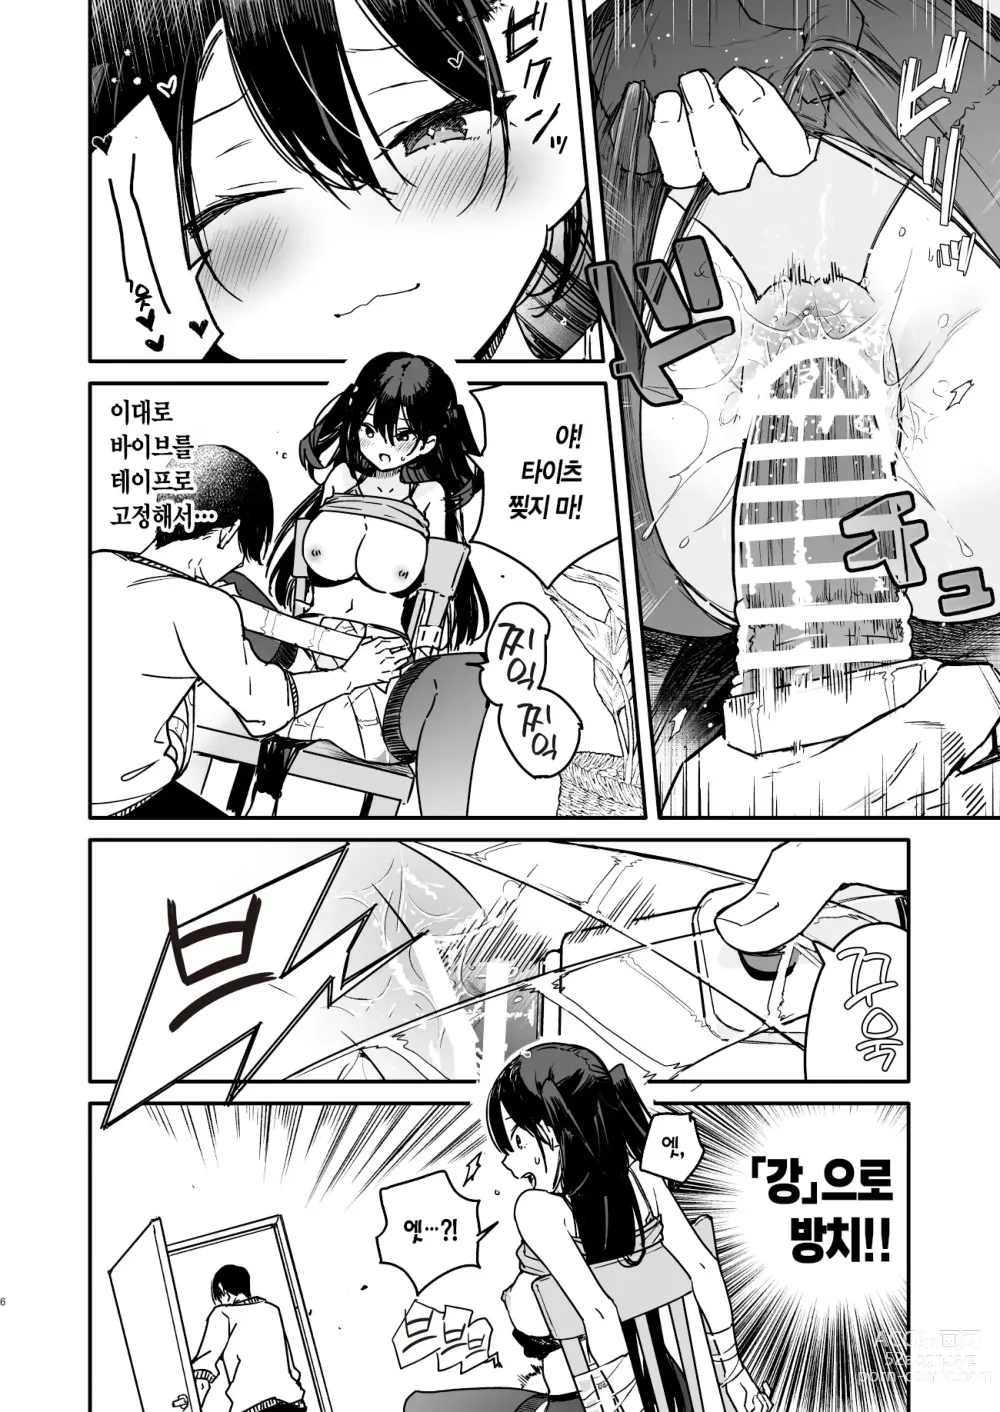 Page 6 of doujinshi 건방떠는 그녀에게 긁히면서 온종일 강제쾌락절정 참교육 섹스